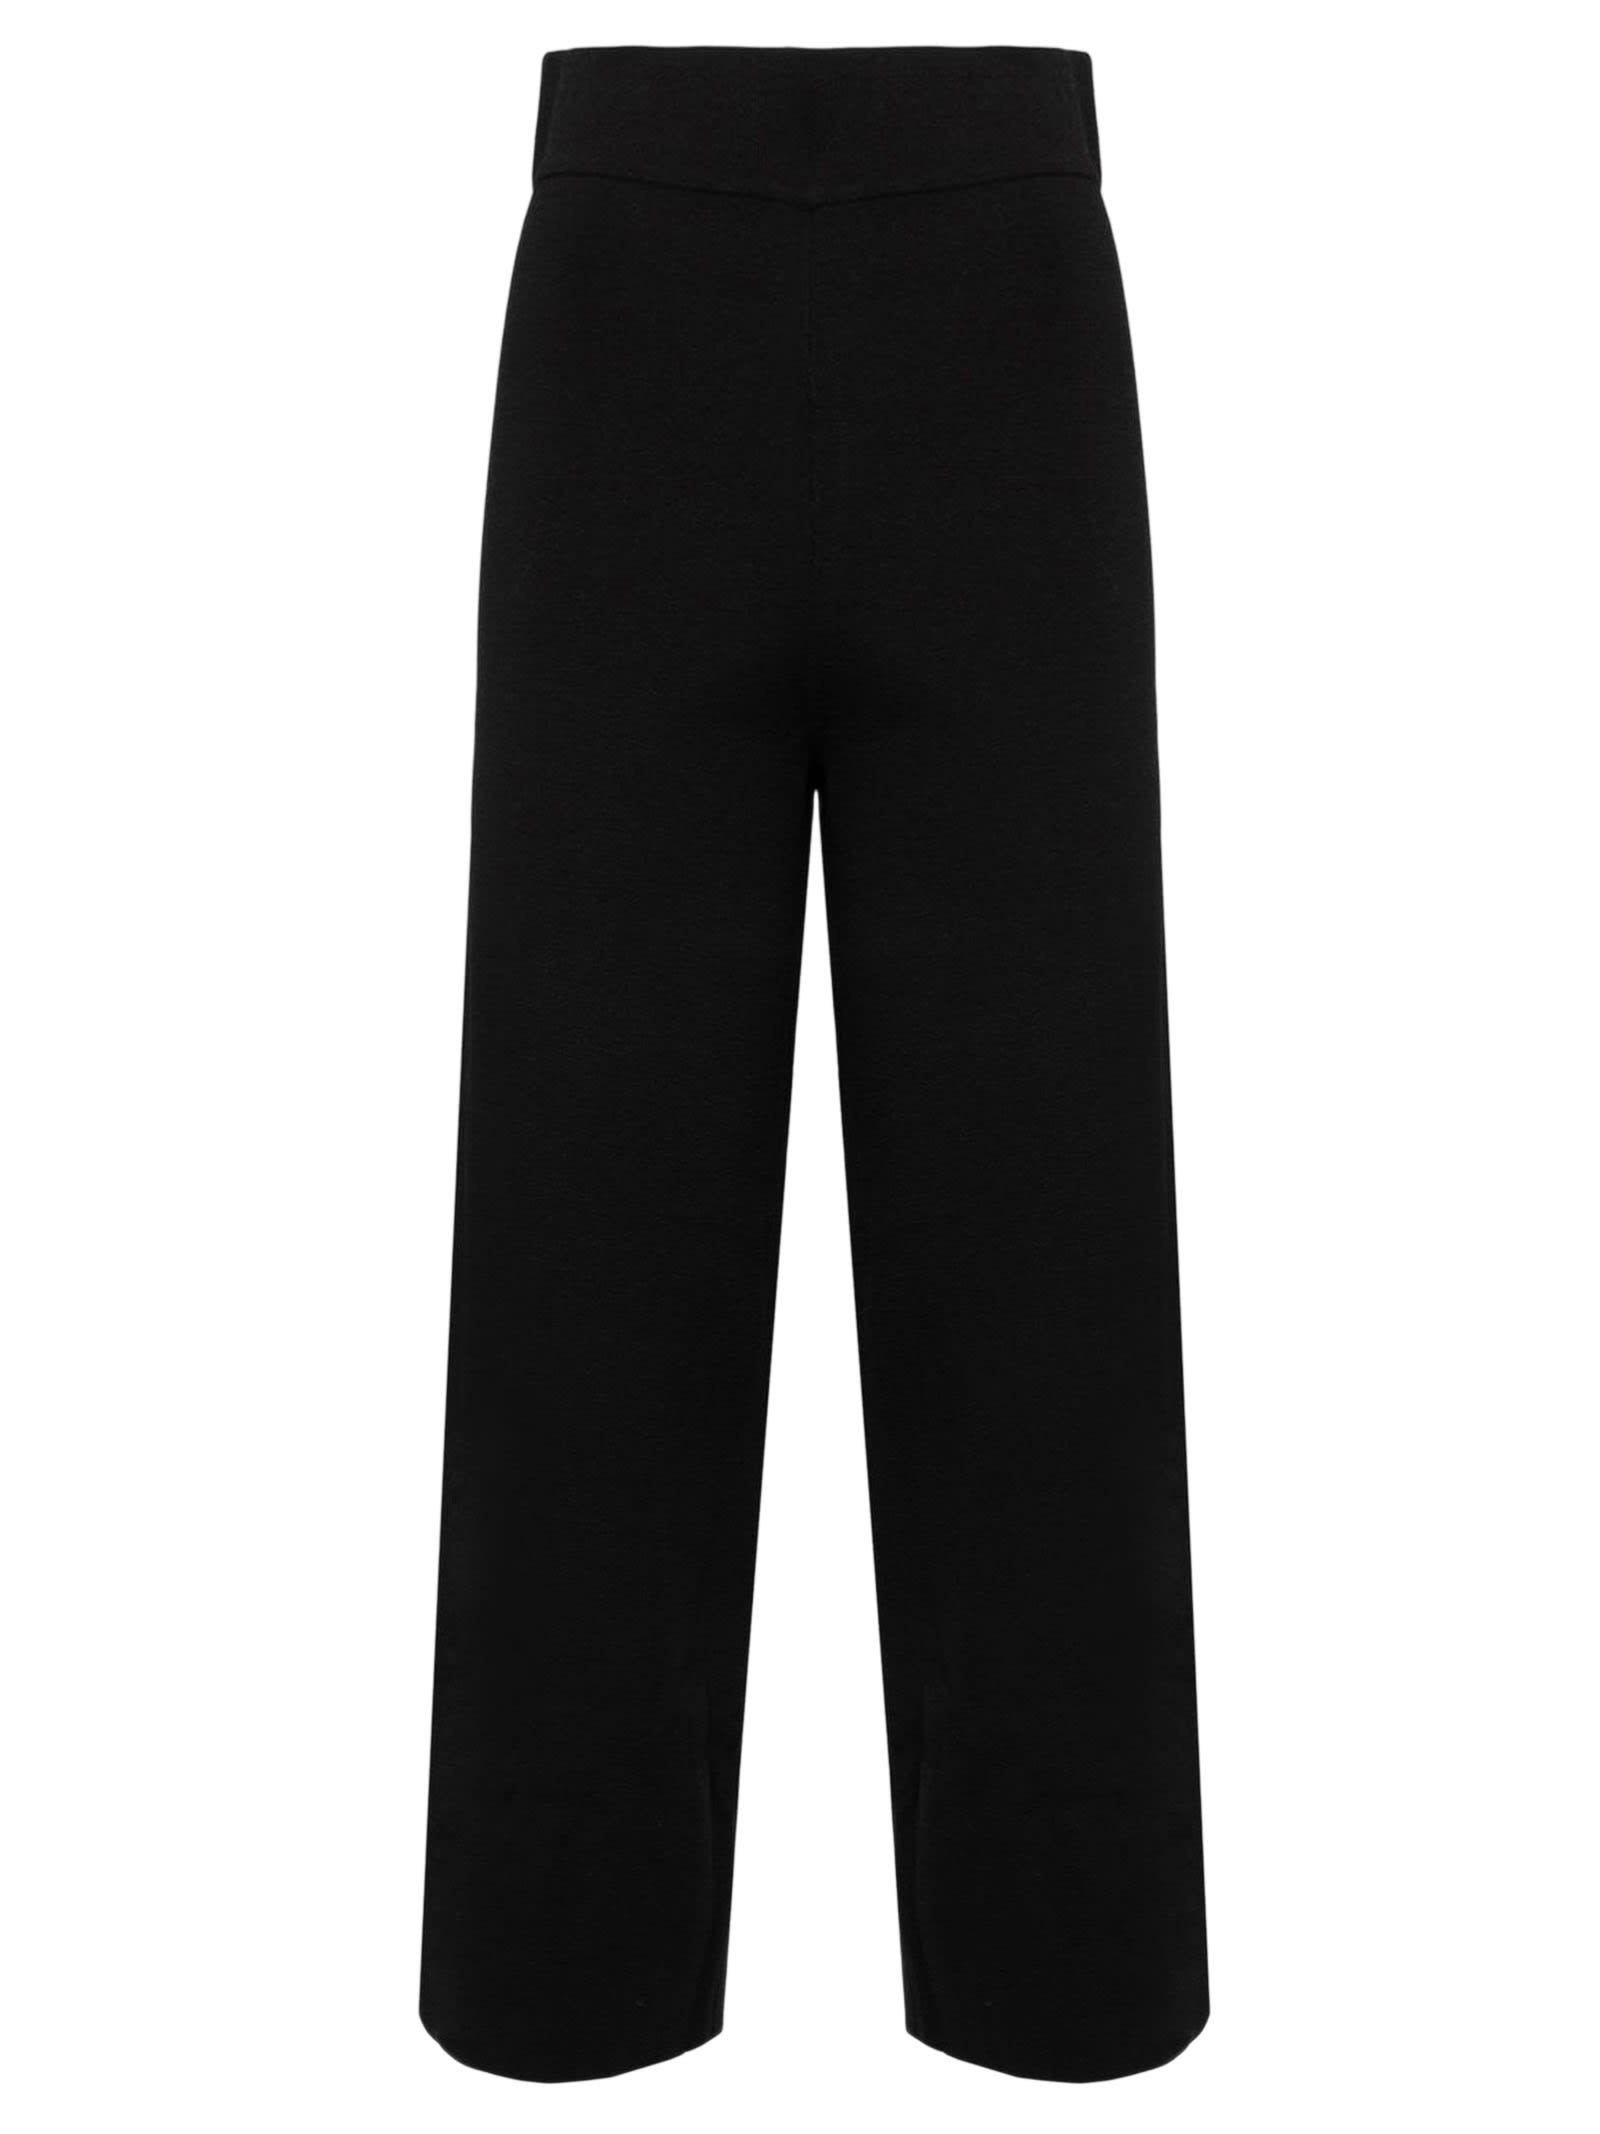 Garconne-style Pants In Black Viscose Knit